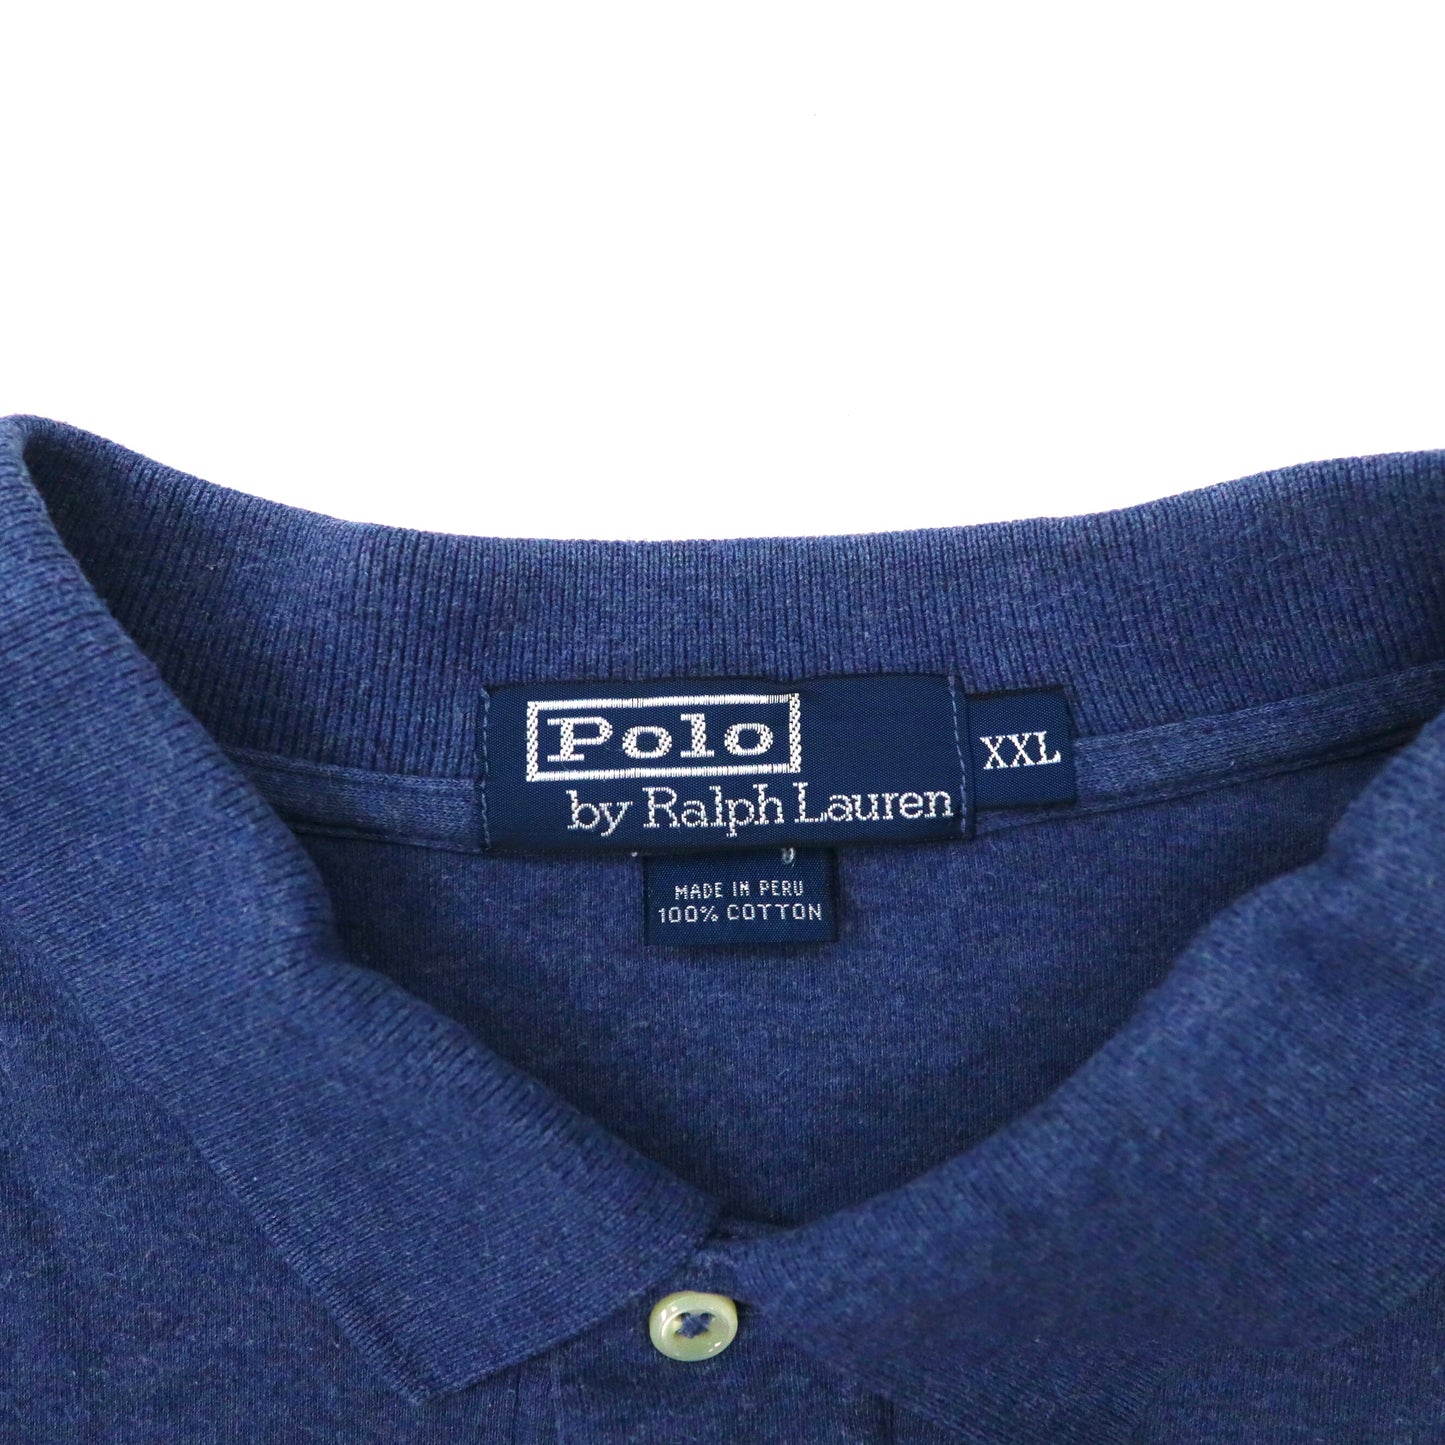 Polo by Ralph Lauren ビッグサイズ 長袖ポロシャツ XXL ネイビー コットン スモールポニー刺繍 ペルー製